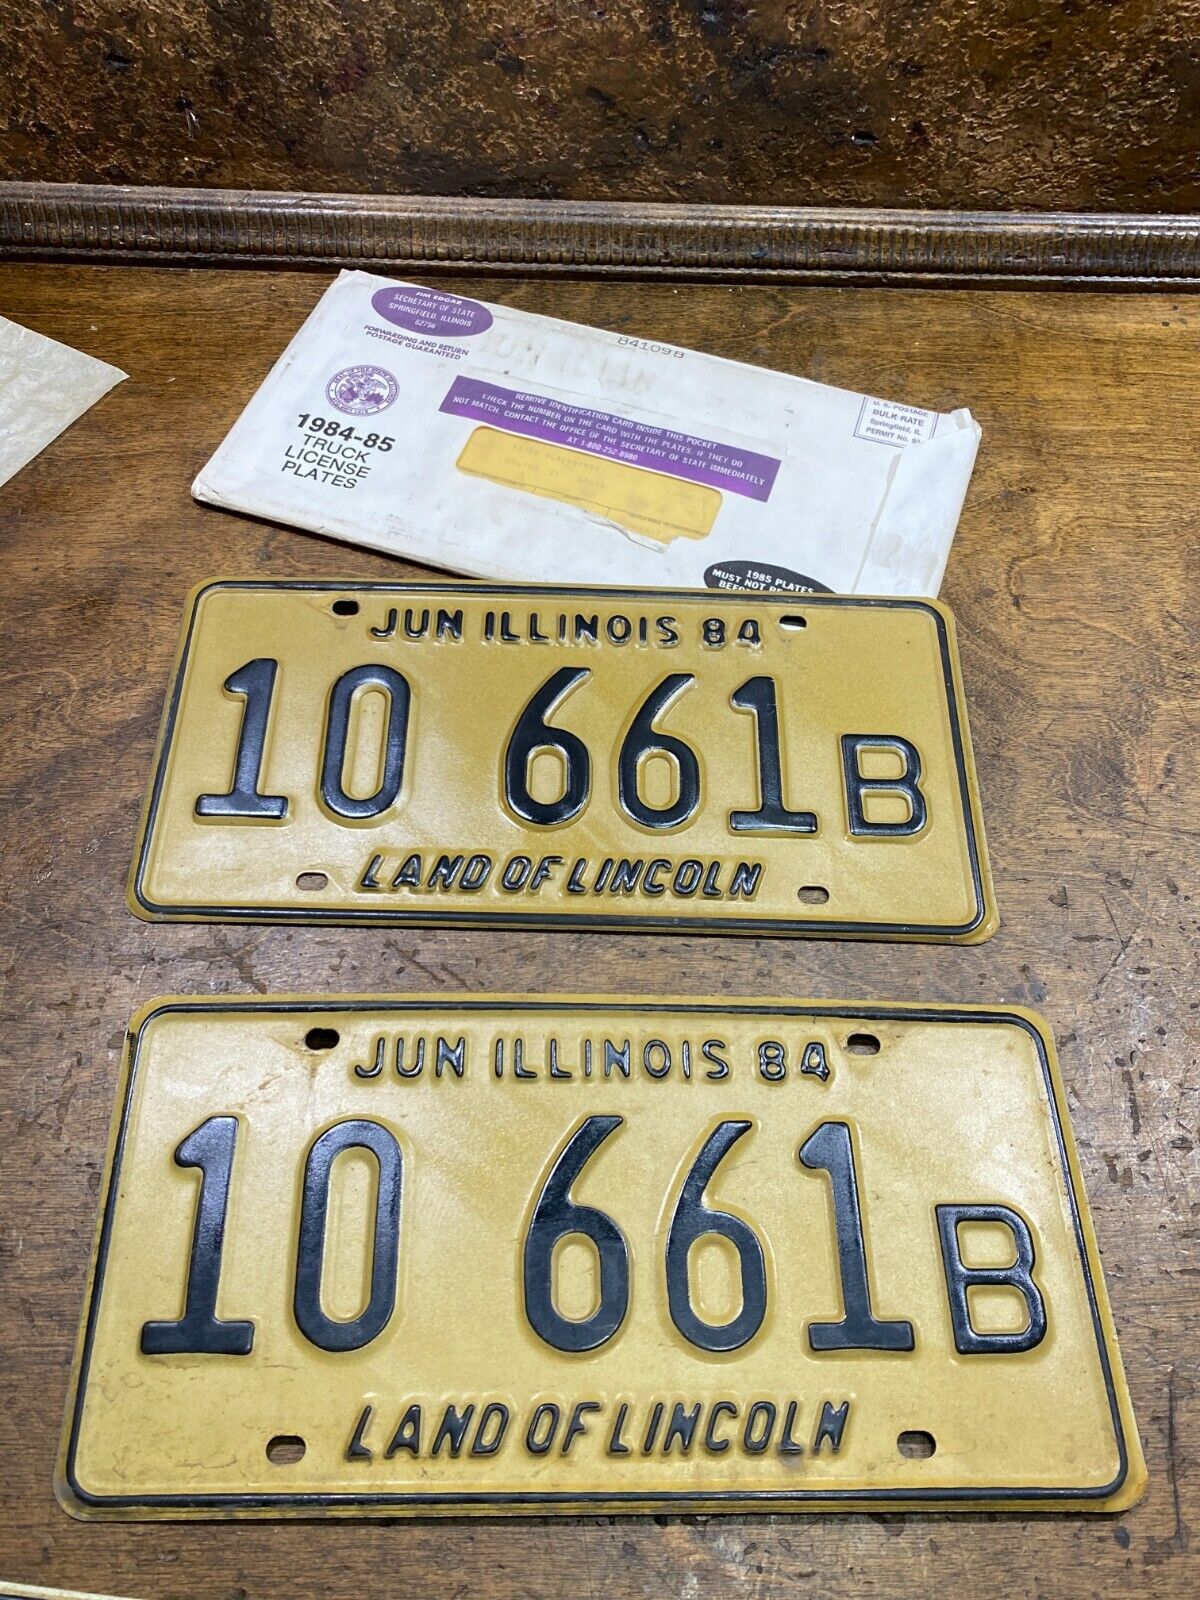 Original Match Pair of 1984 Illinois Car License Plate 10 661 b Automobile Tags